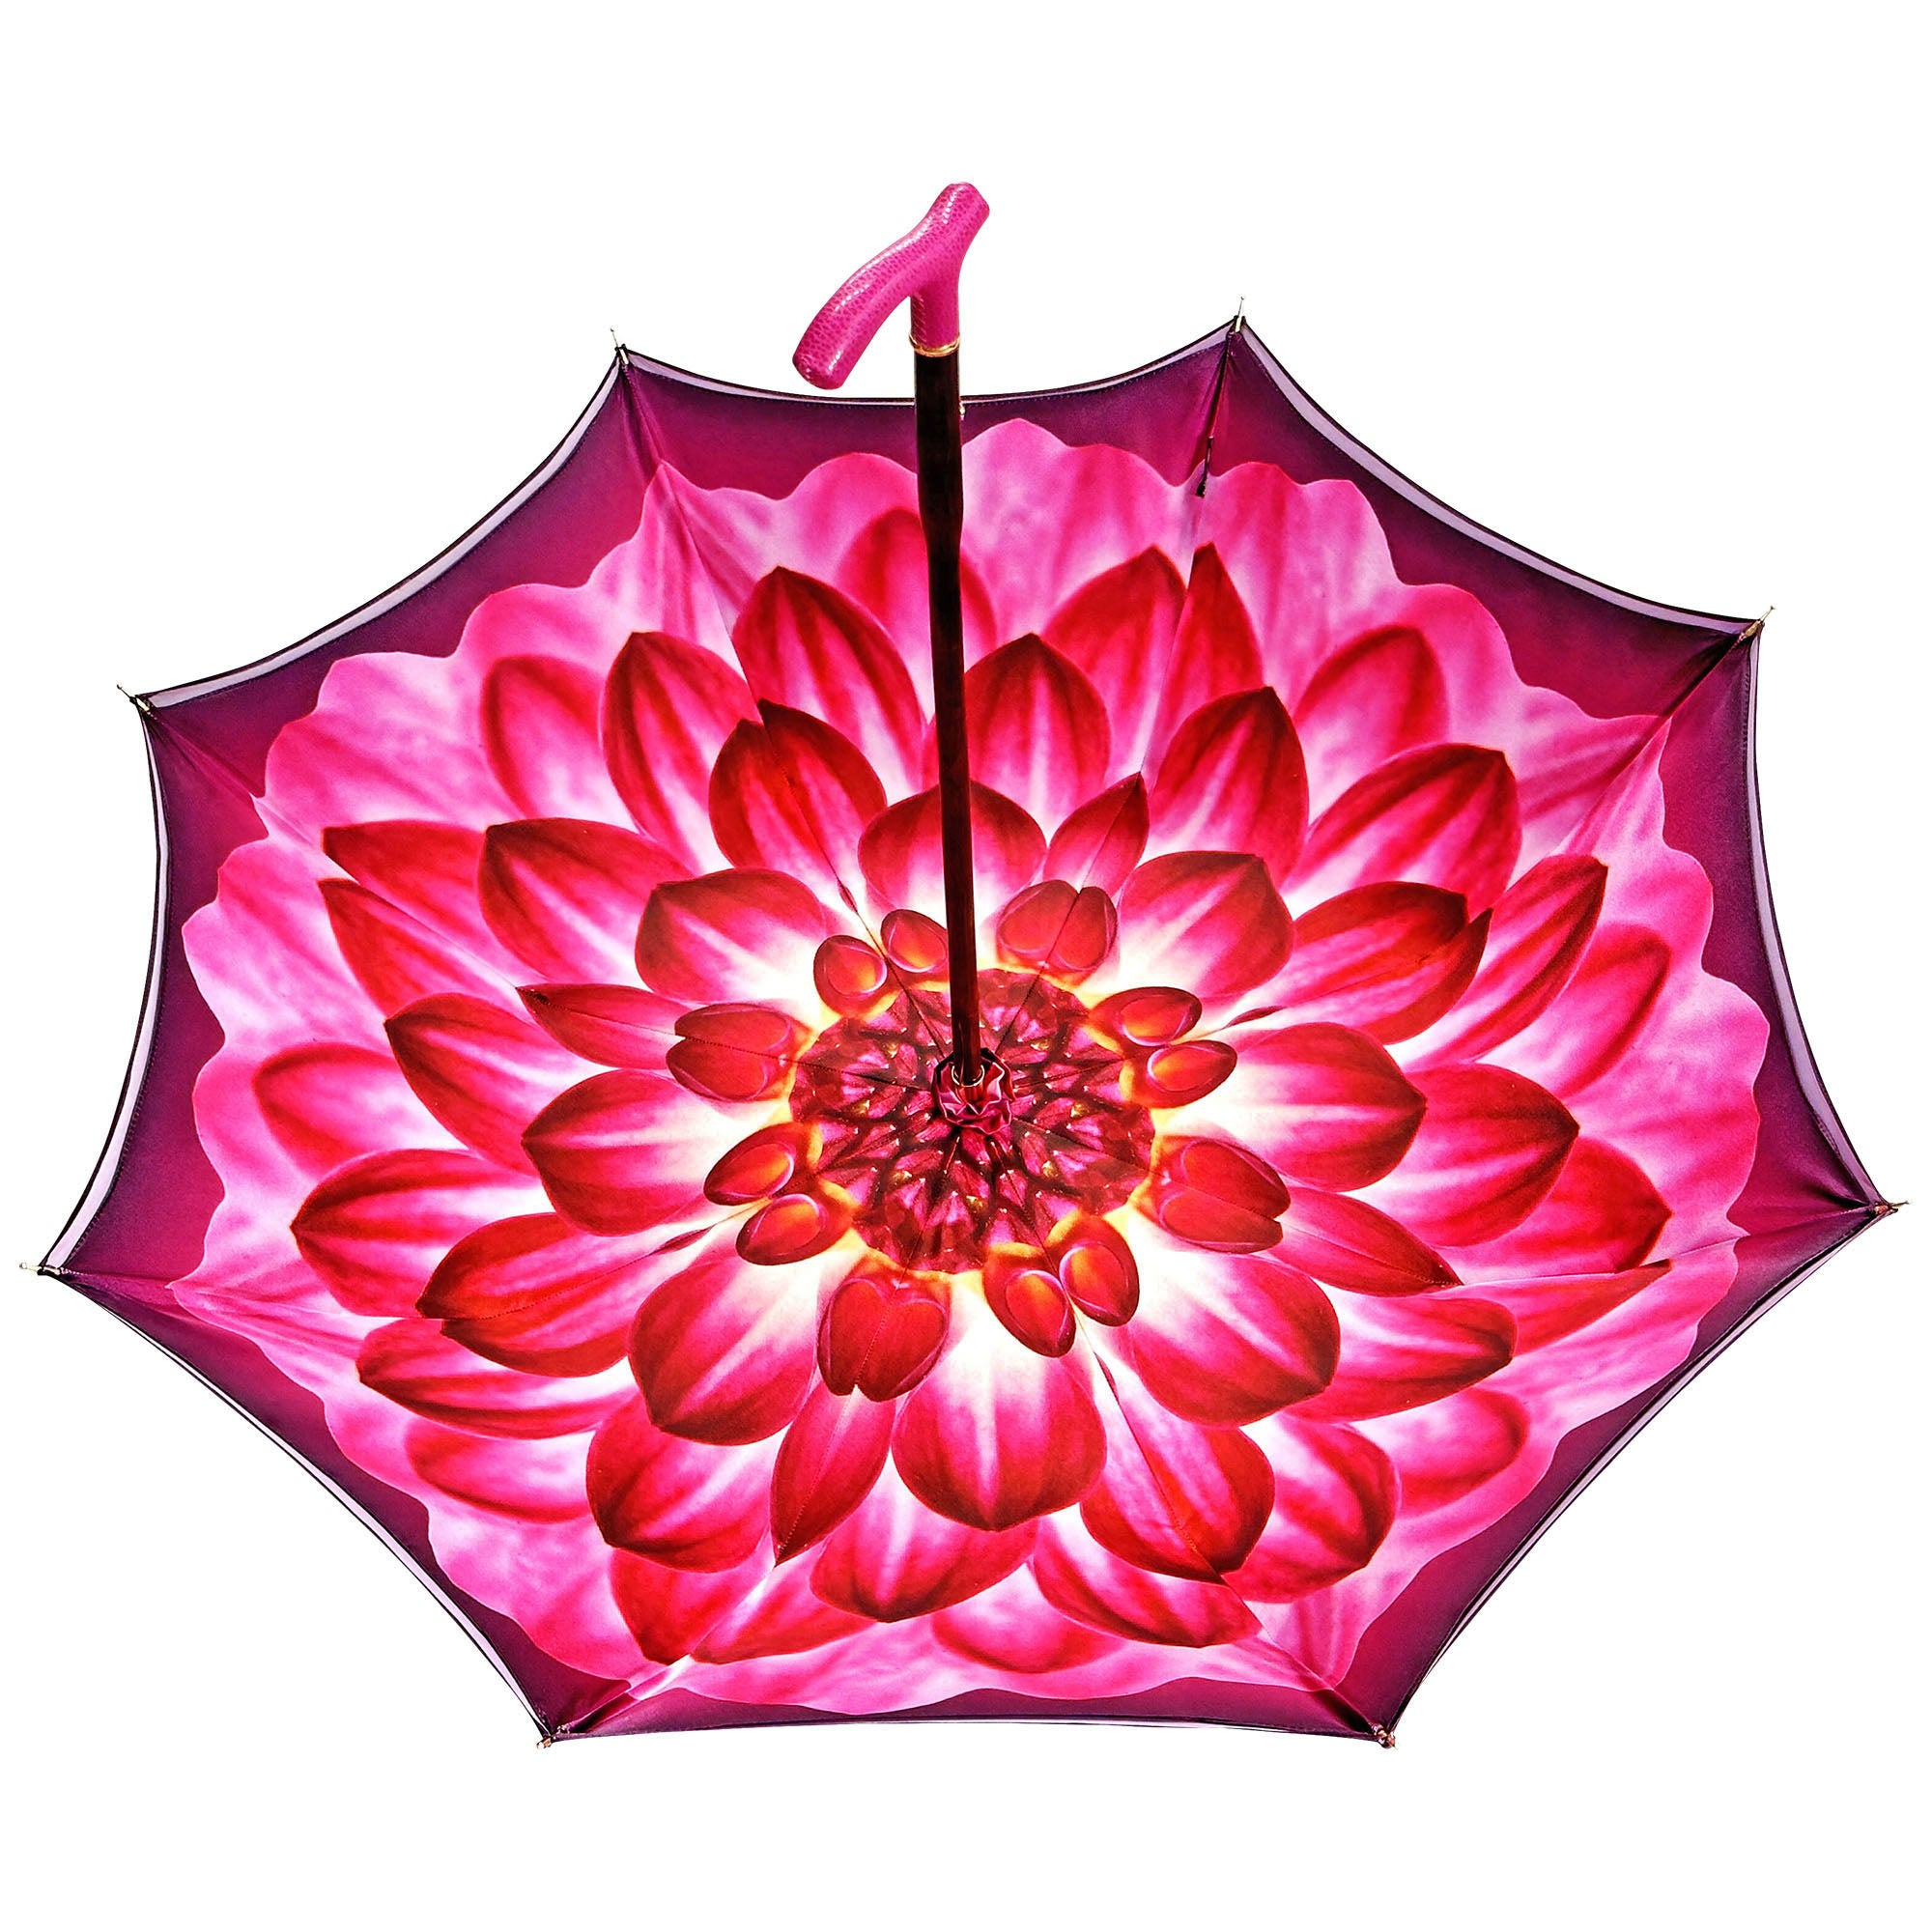 Elegant and fancy ladies umbrella - handmade in Italy